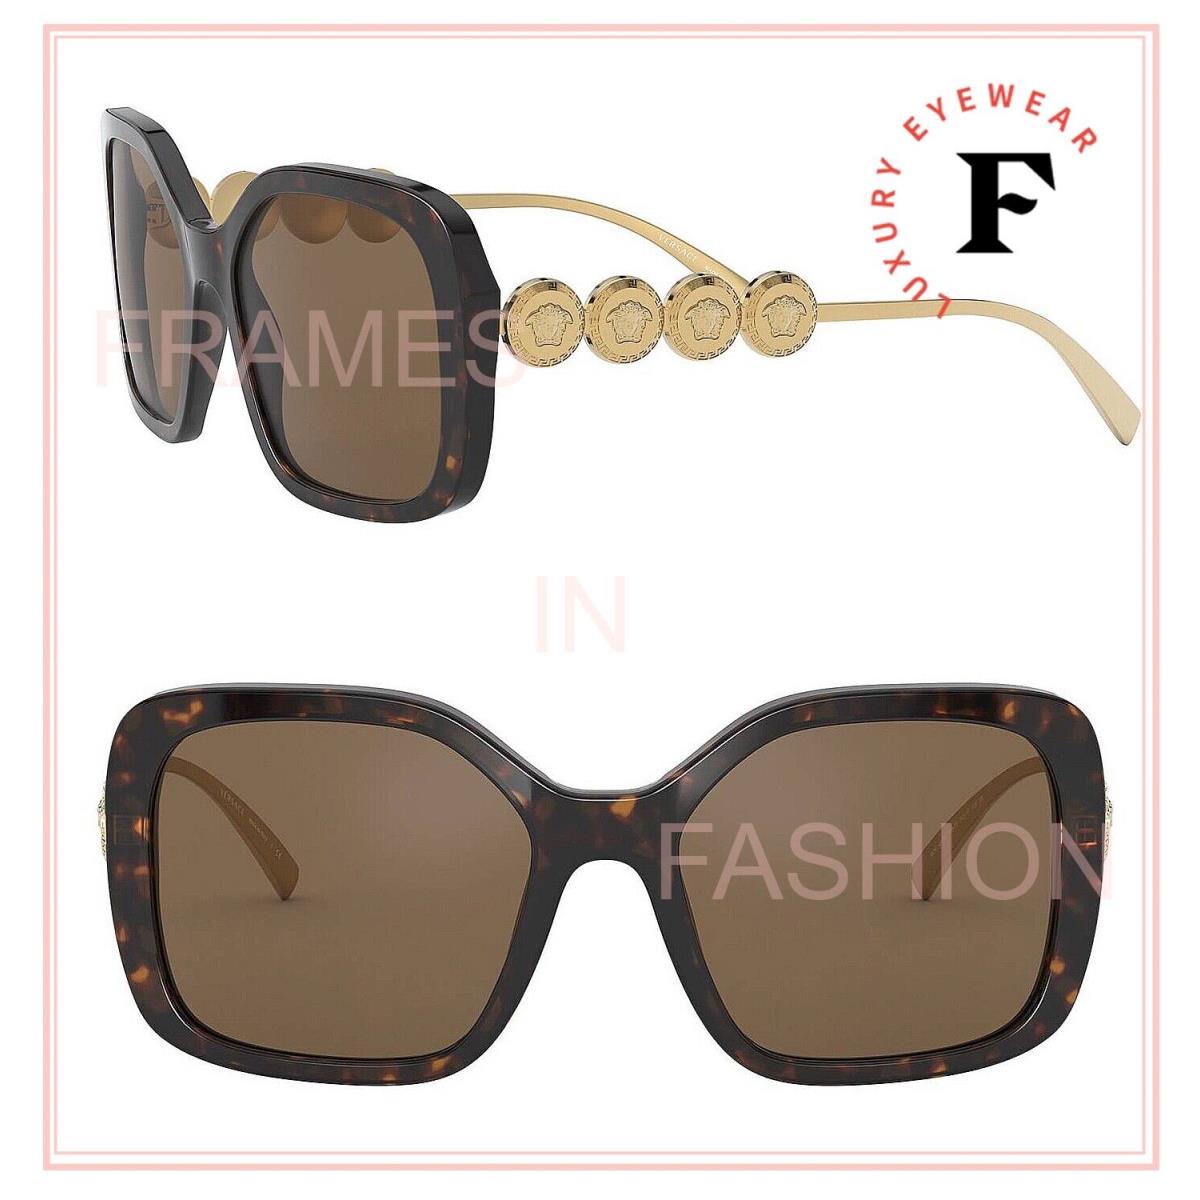 New Versace sunglasses VE4344 502513 56mm Tortoise Brown Medusa Heads AUTHENTIC 